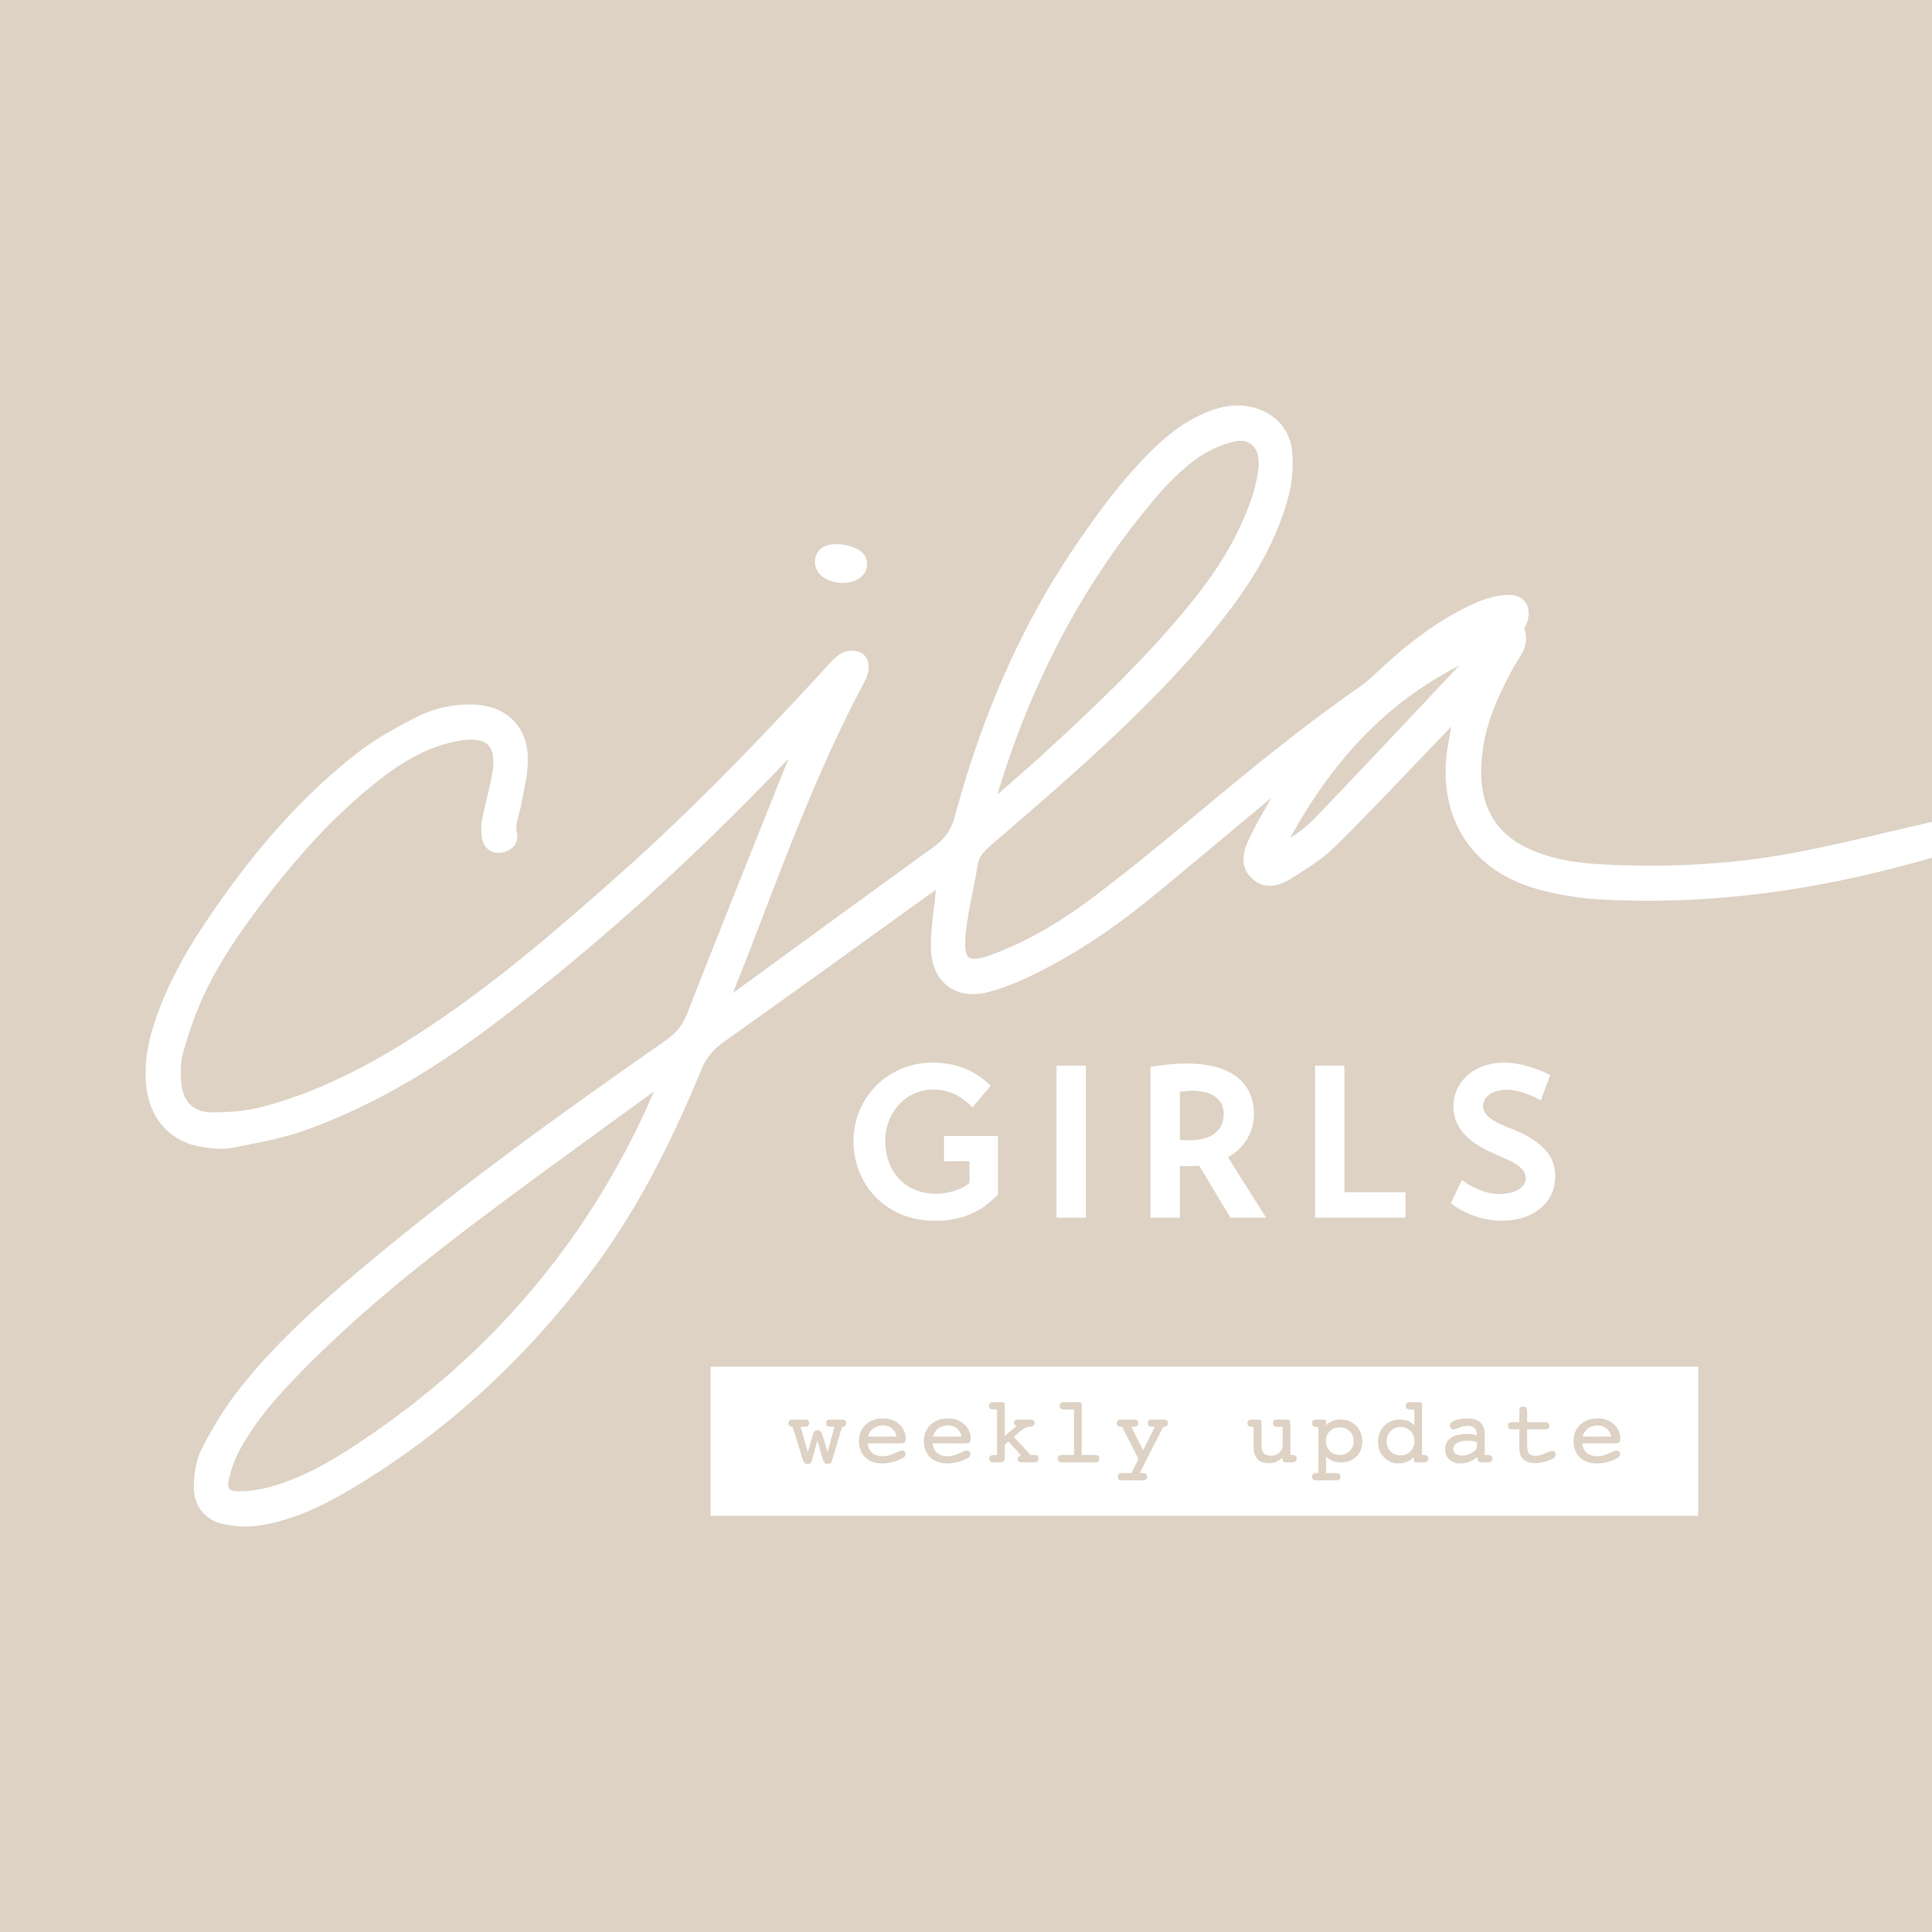 CJLA Girls Weekly Update: March 29-April 4